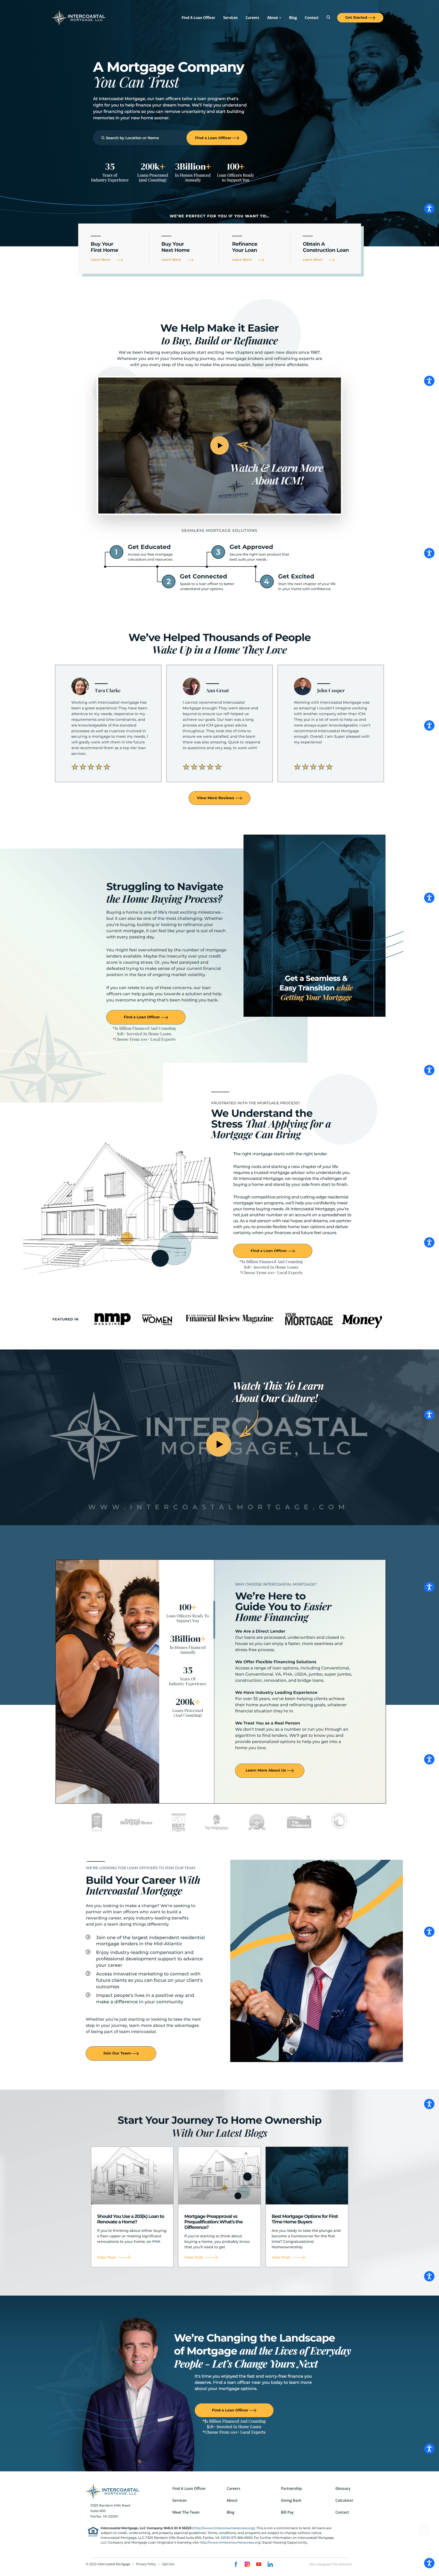 Intercoastal Mortgage - after